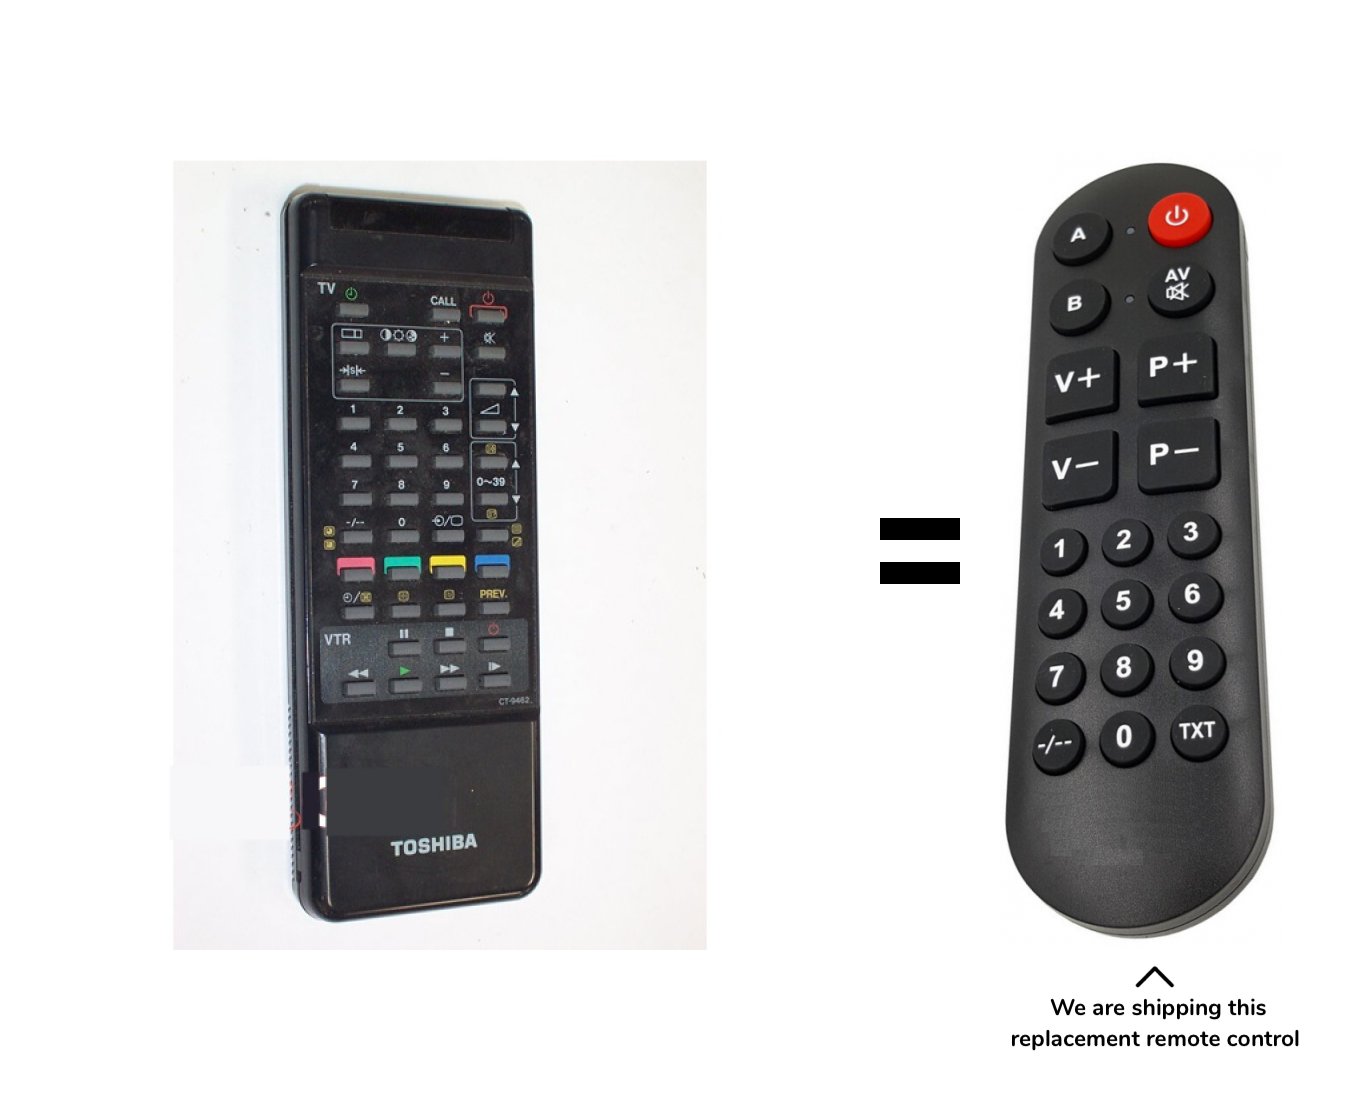 Toshiba CT-9640 remote control for seniors